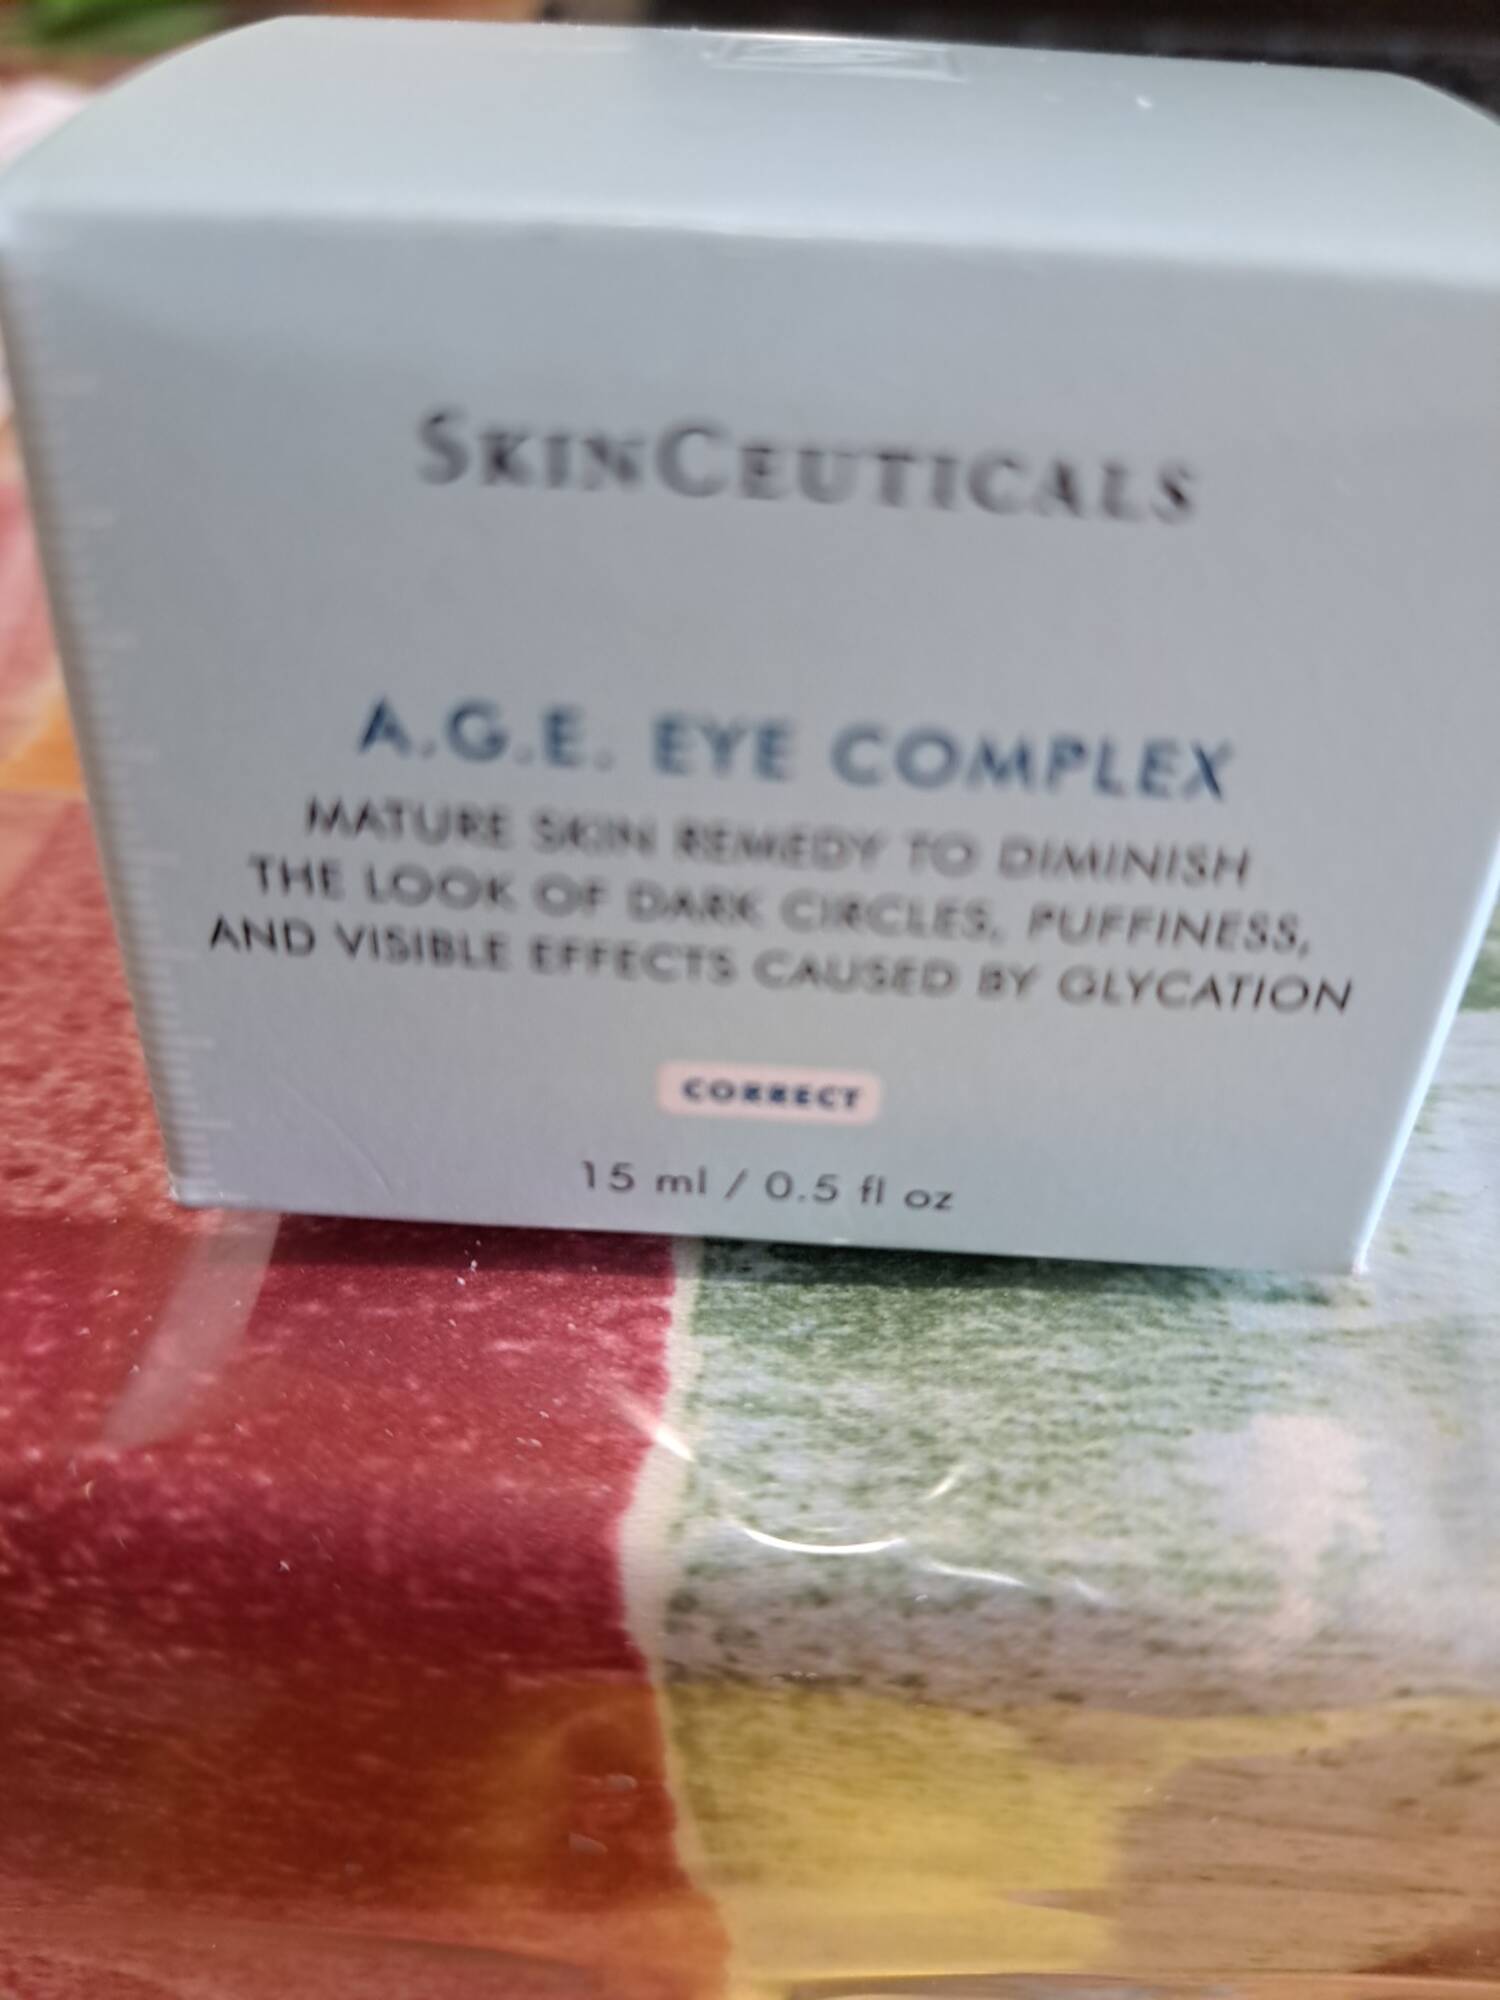 SKINCEUTICALS - A.g.e eye complex